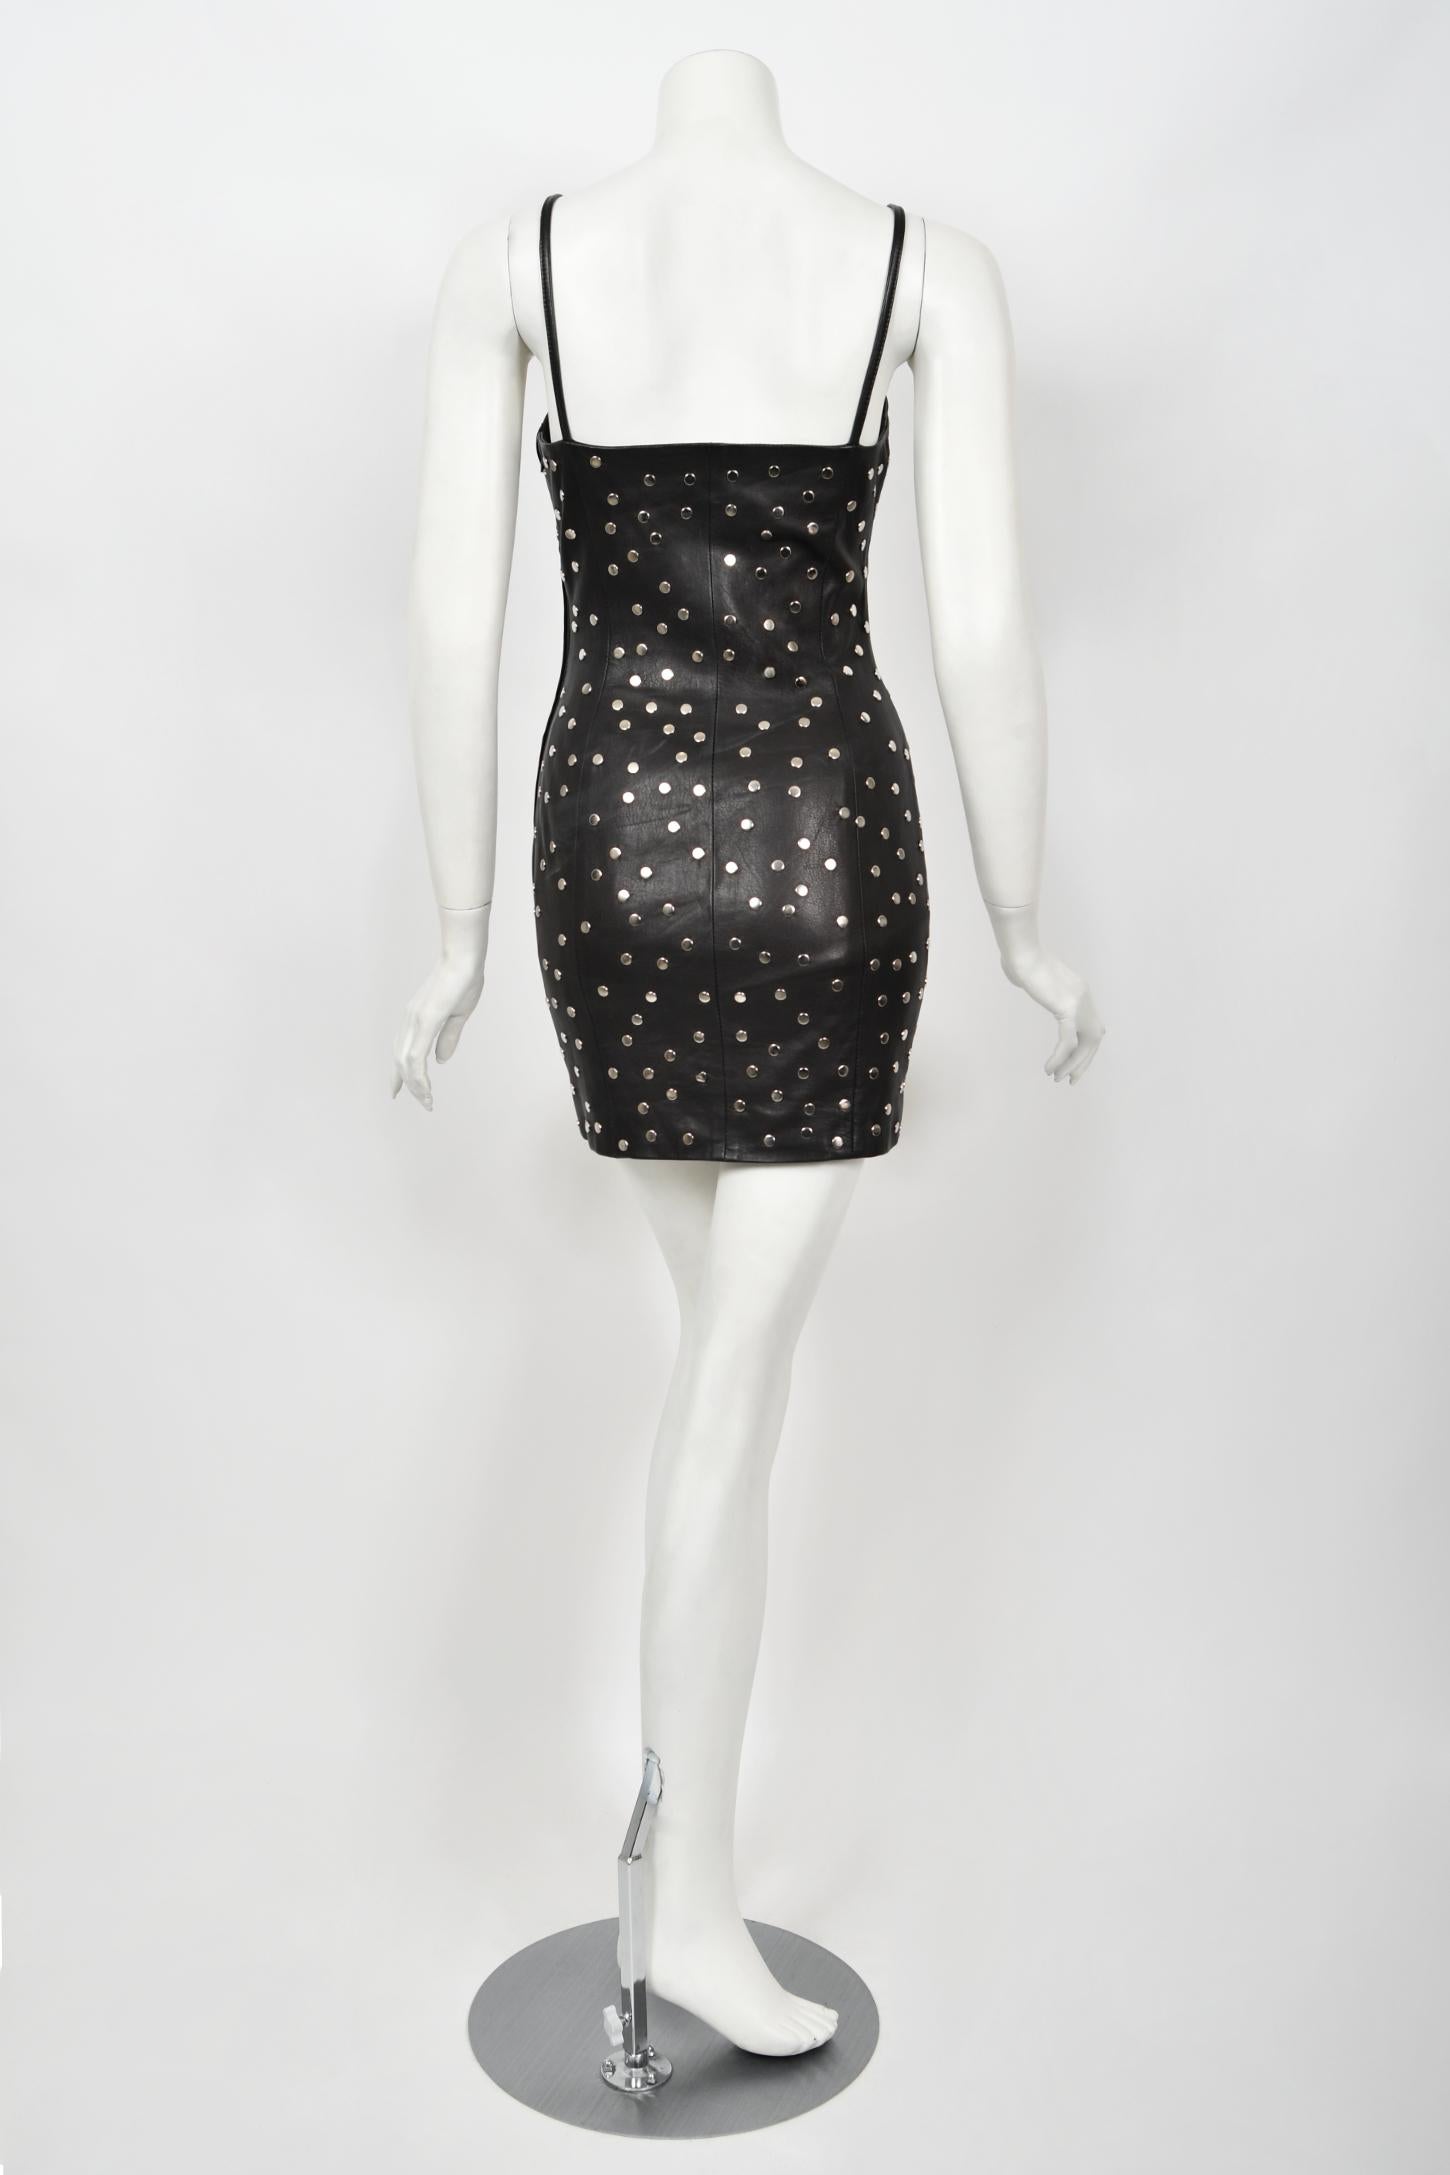 Vintage 1991 Dolce & Gabbana Documented Runway Studded Black Leather Mini Dress For Sale 10